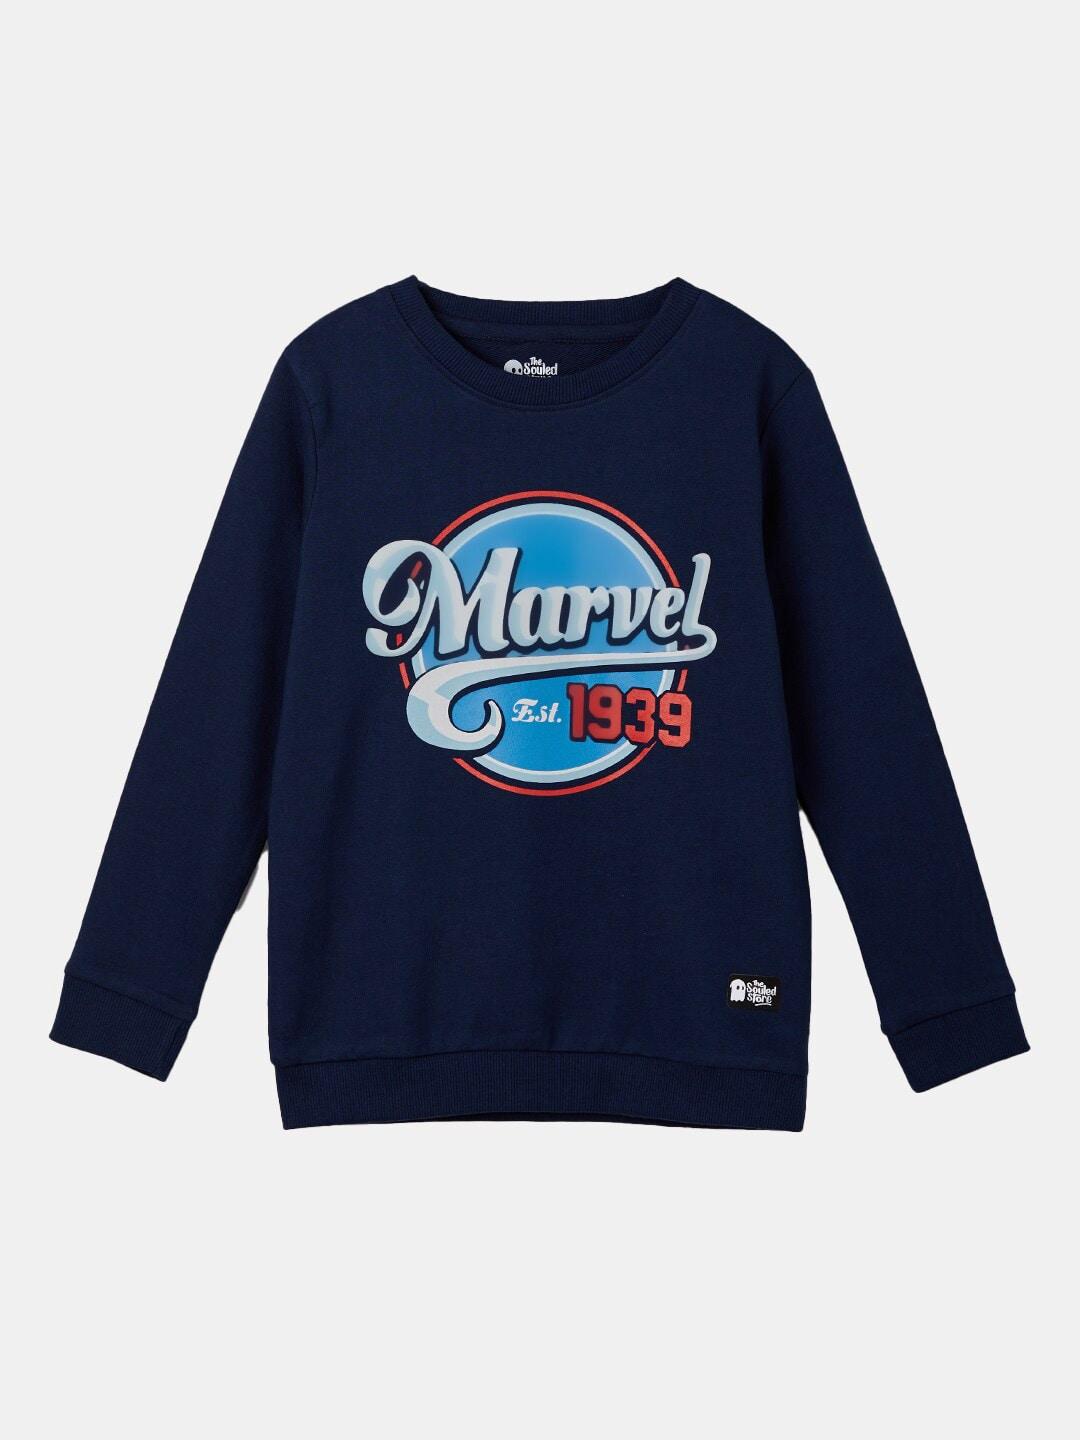 the-souled-store-boys-blue-printed-sweatshirt